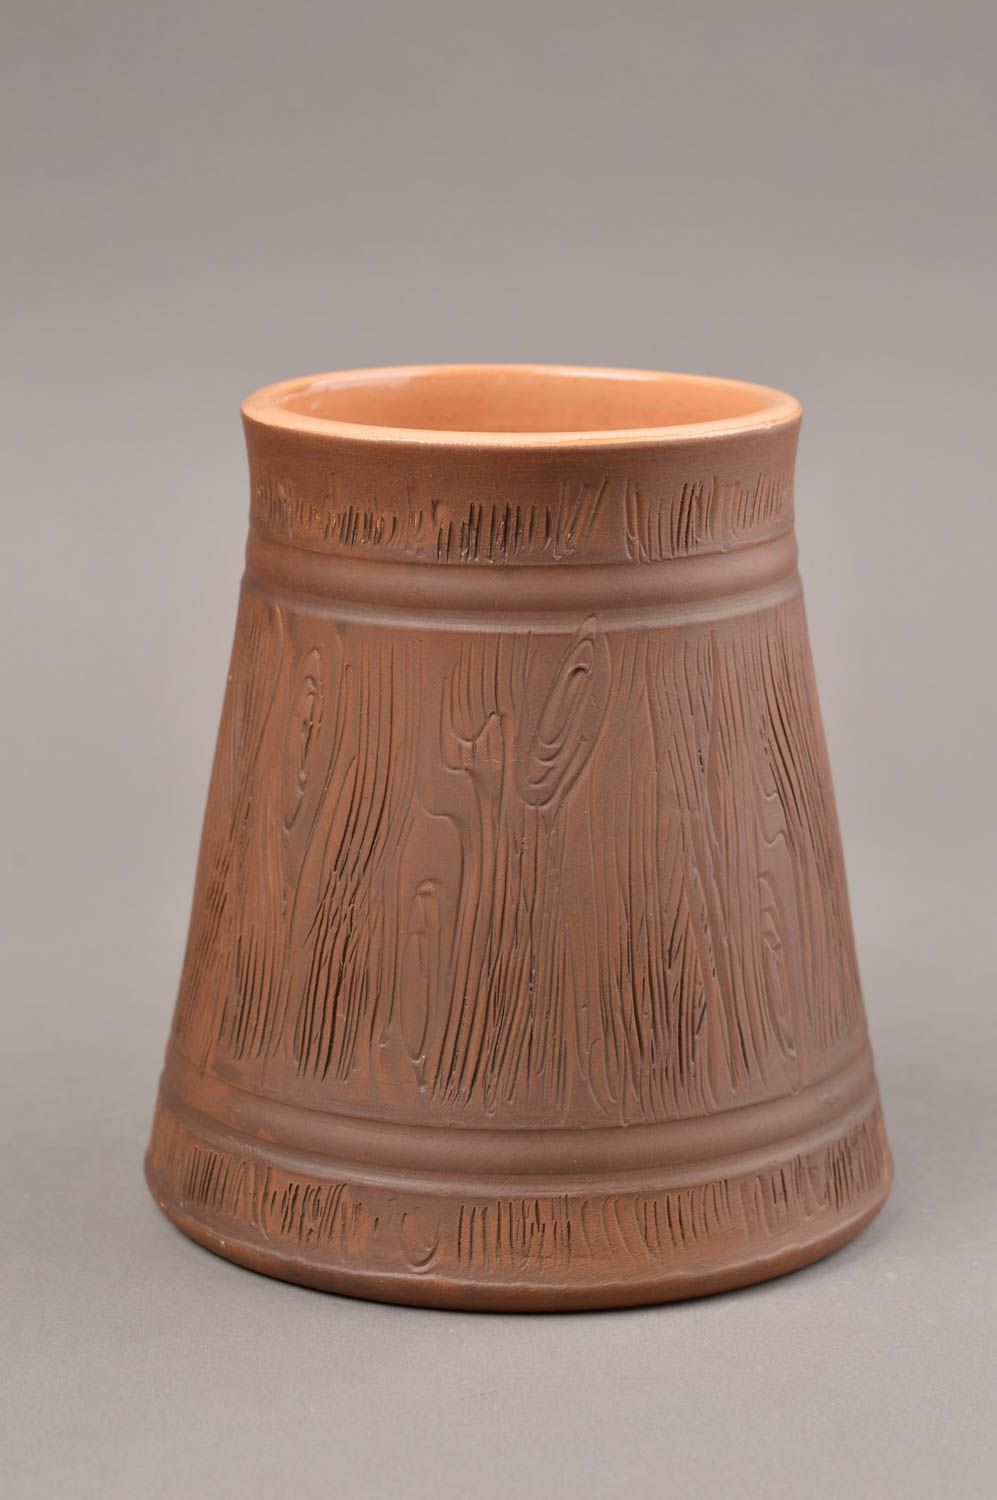 16 oz ceramic large clay drinking mug 1,26 lb photo 7